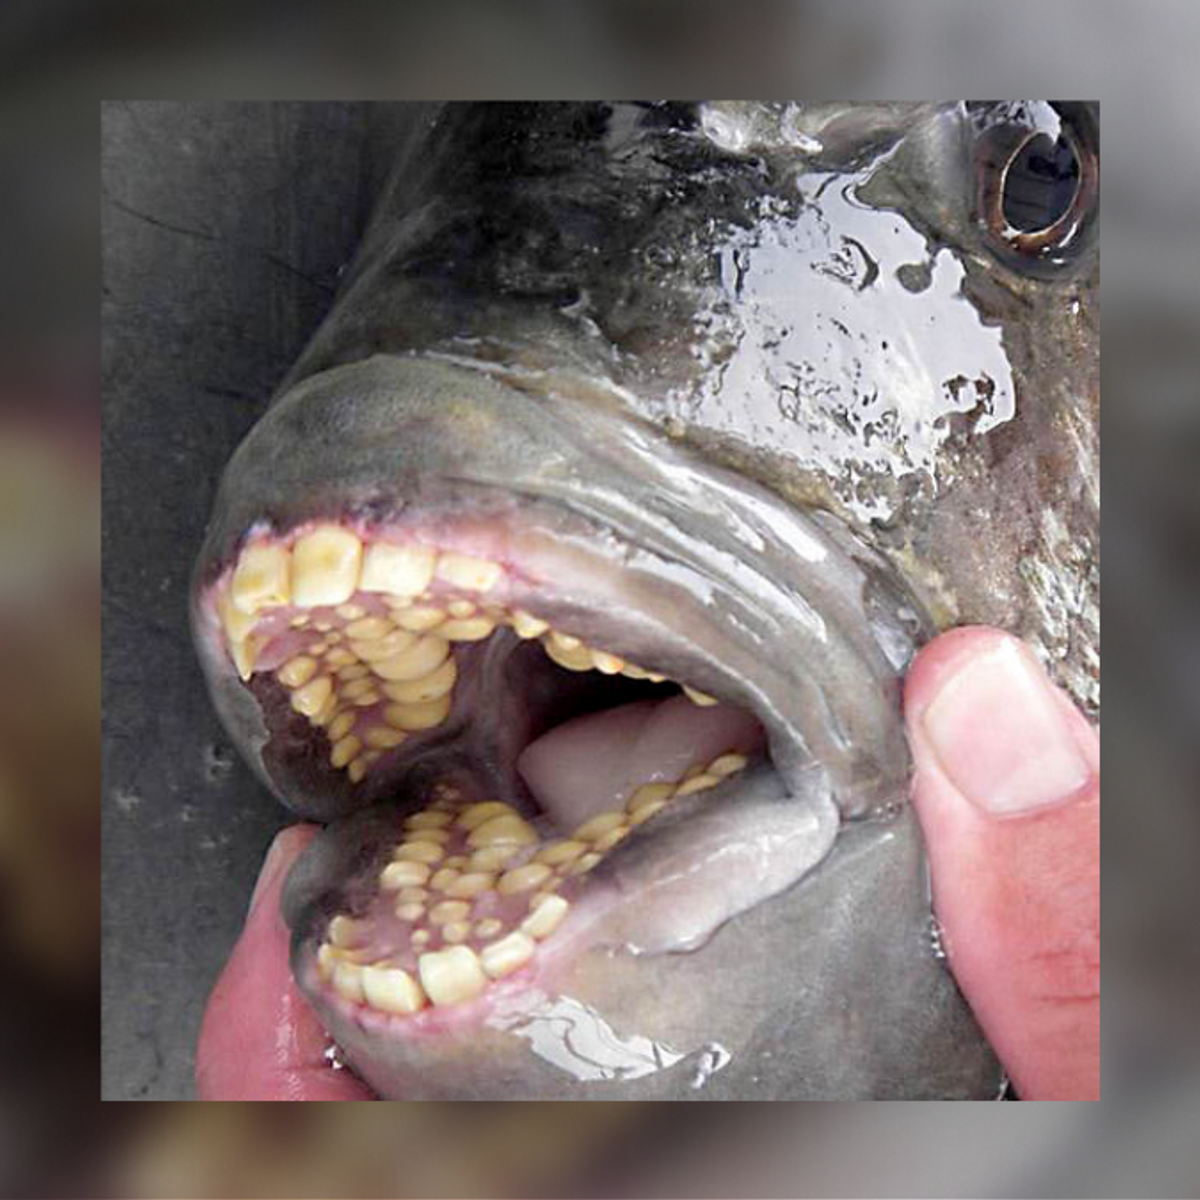 Can Sheepshead Fish Bite People with Their 'Human' Teeth? 